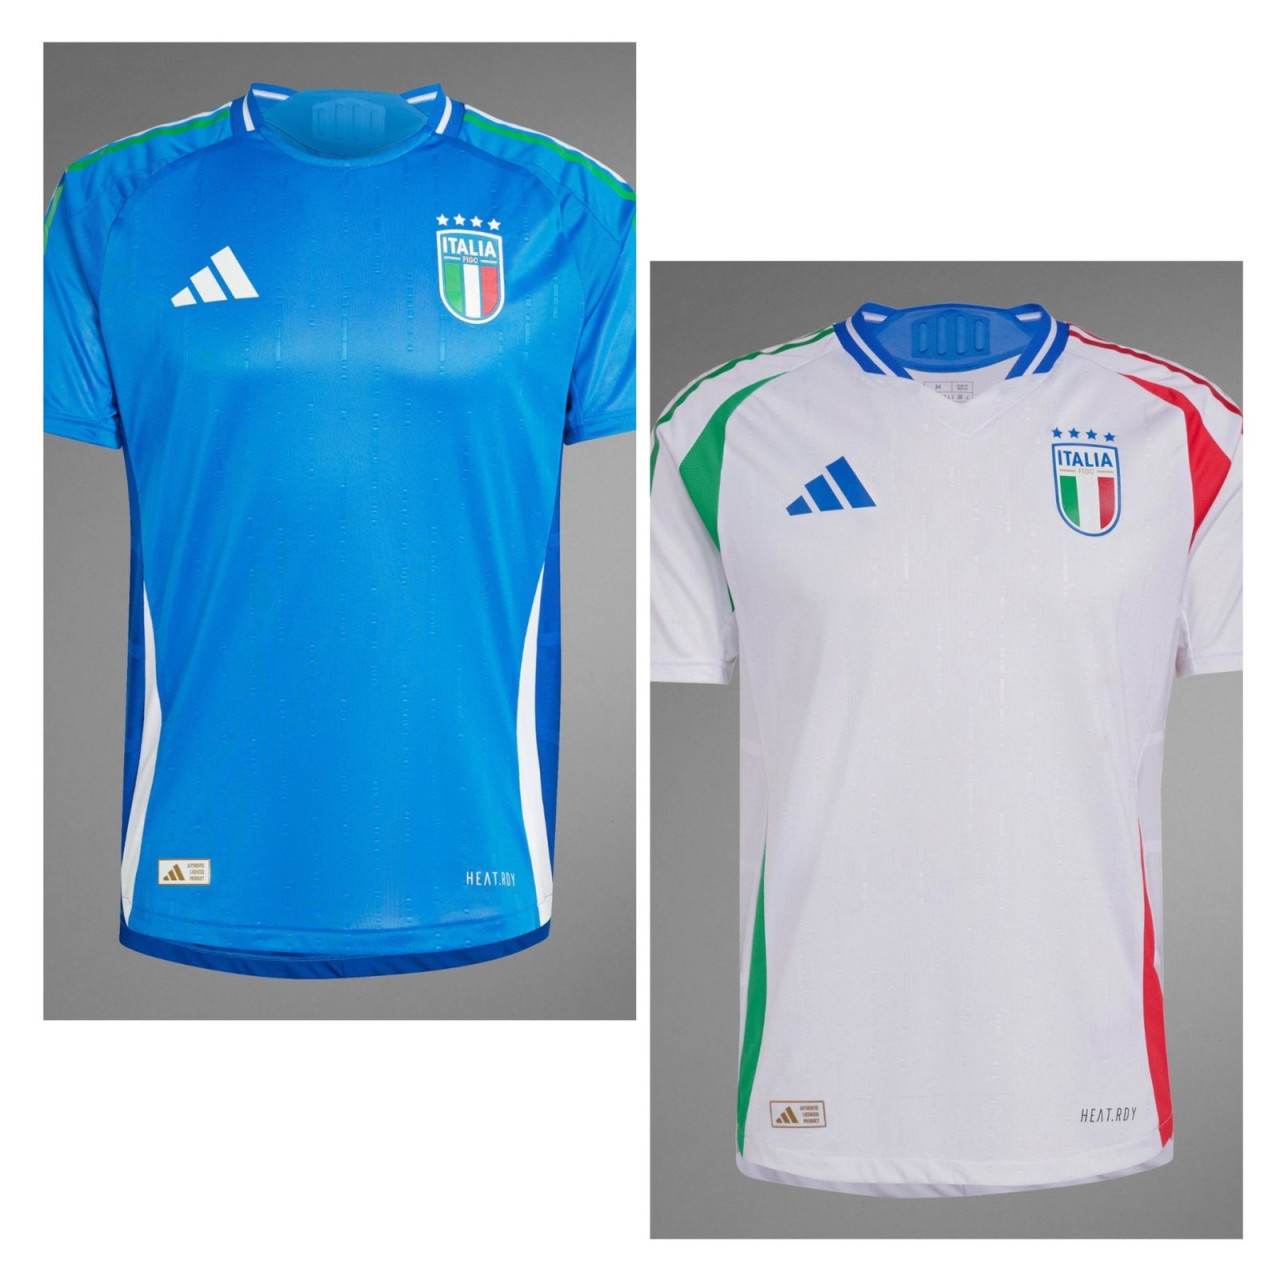 Camiseta titular y suplente de Italia.